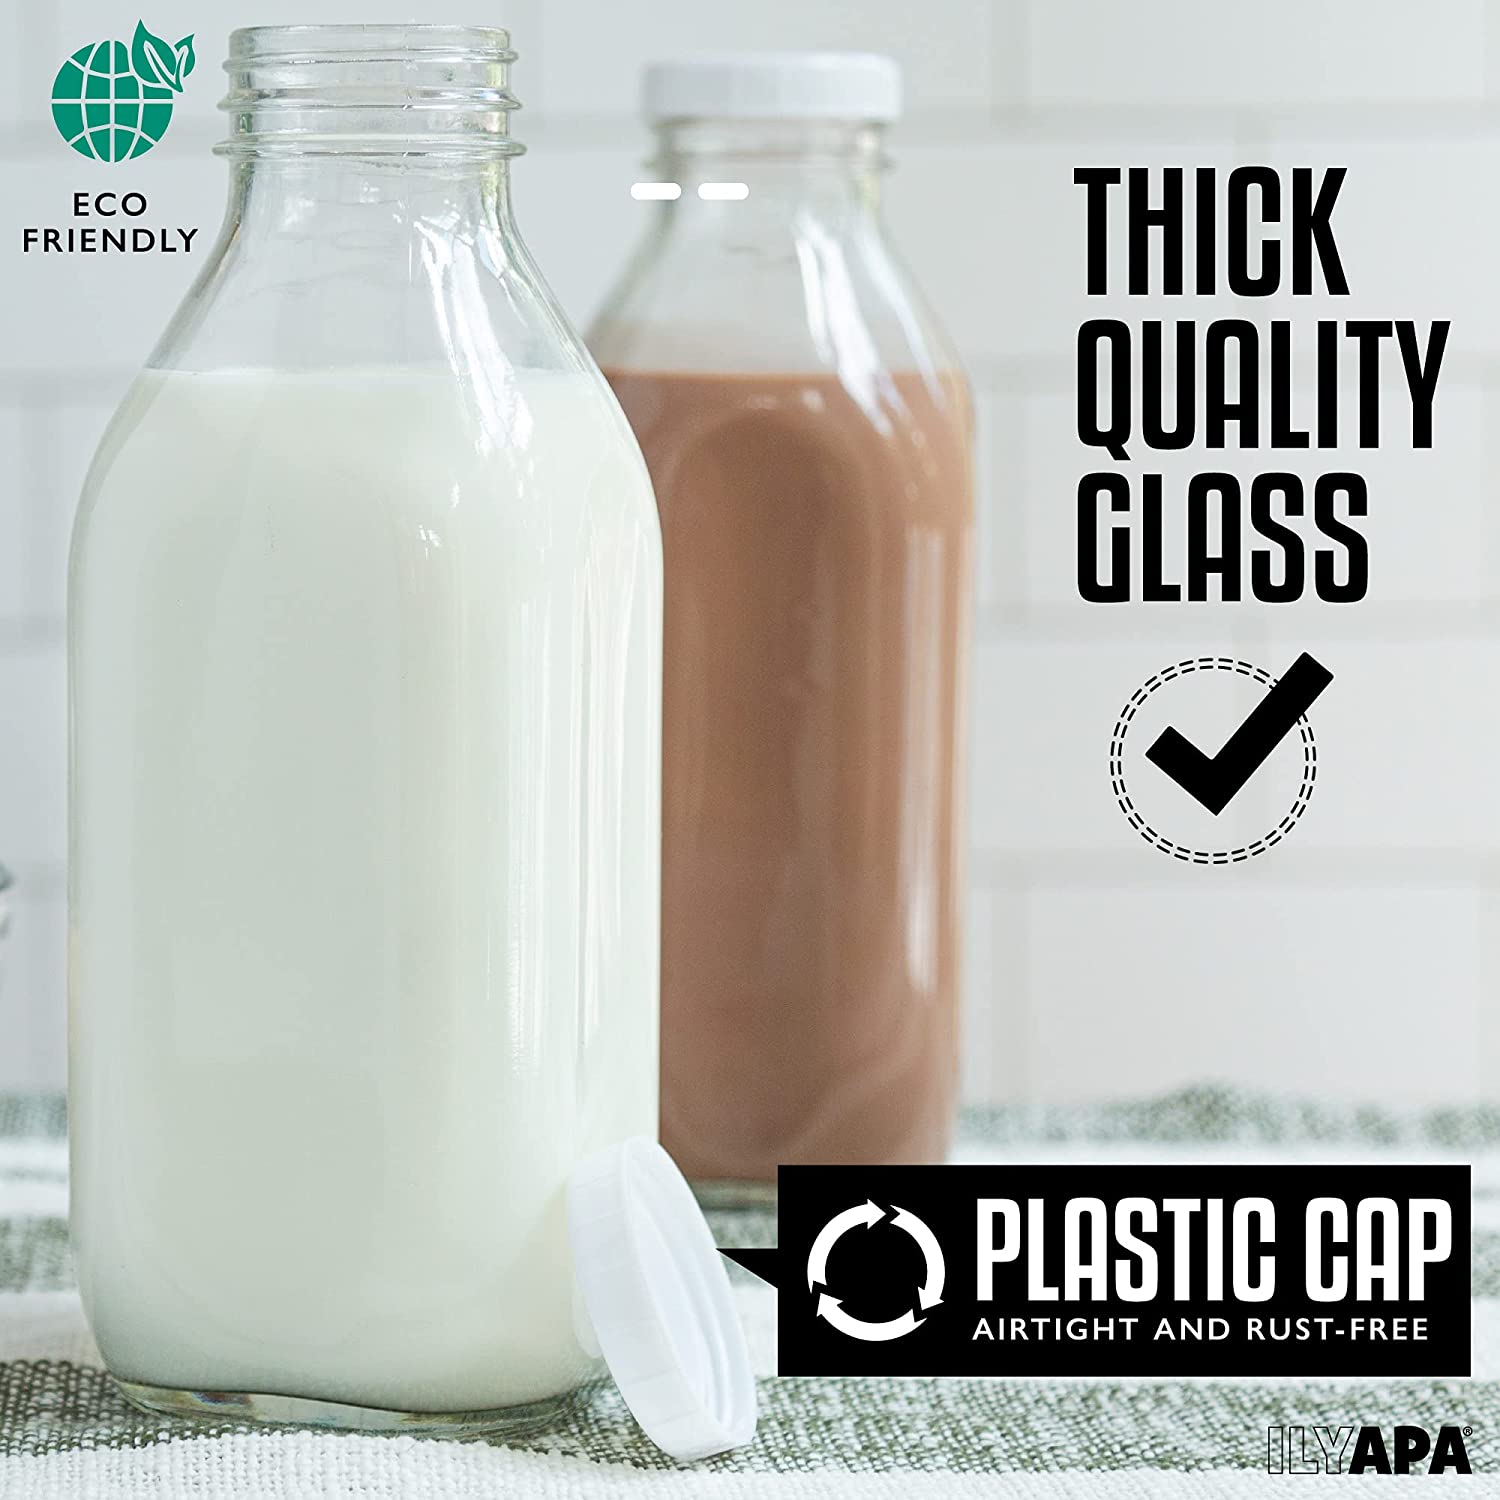 1 Quart Glass Milk Bottle With Lid